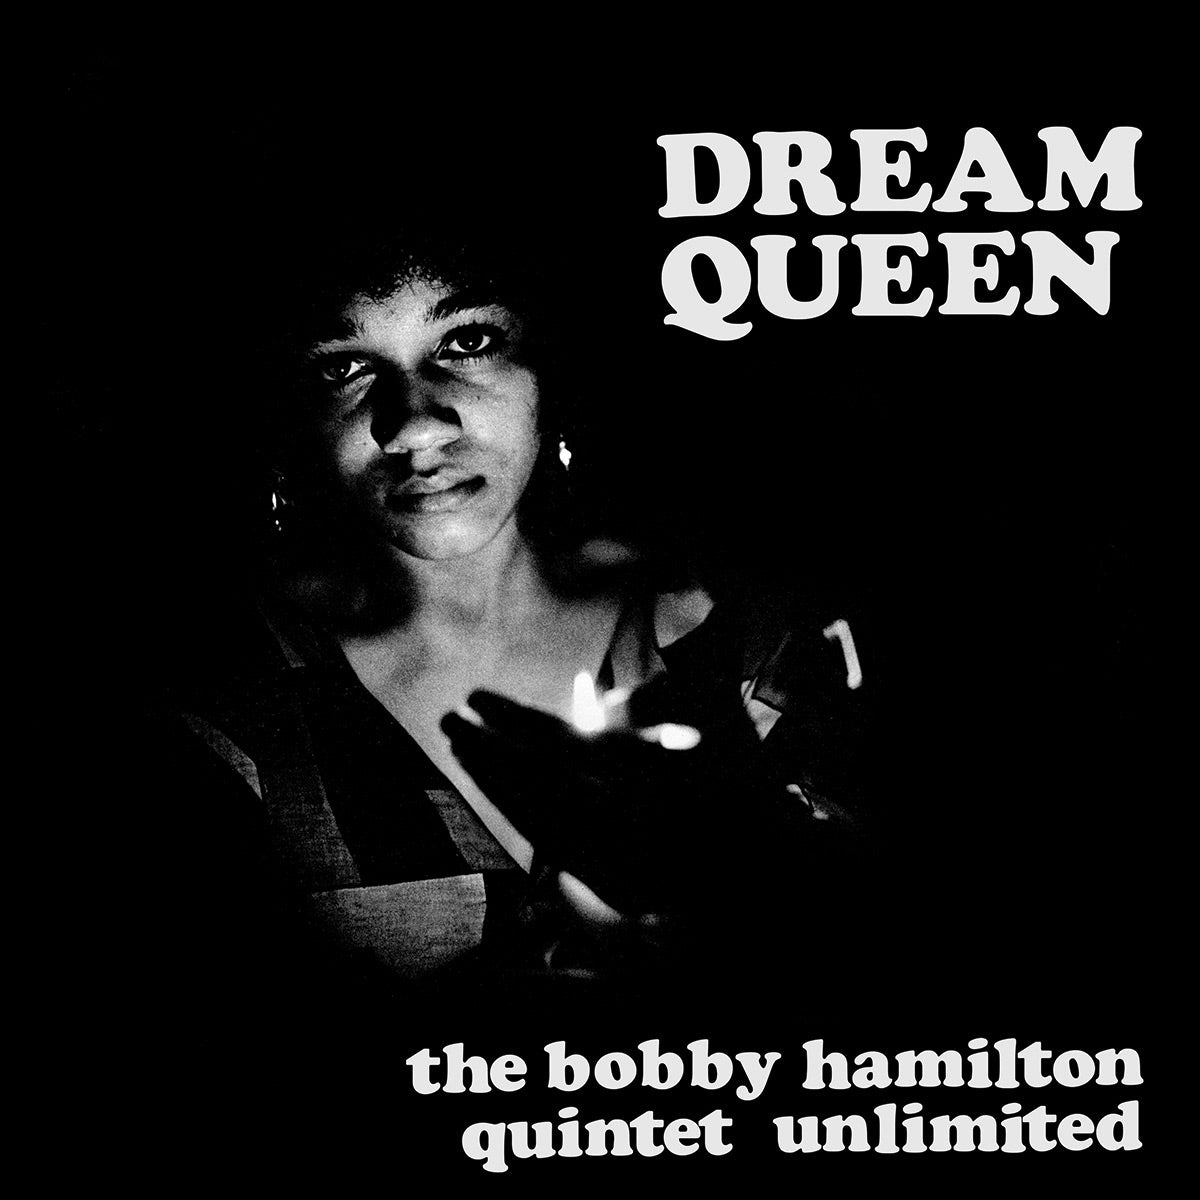 Bobby Hamilton Unlimited Quintet - Dream Queen